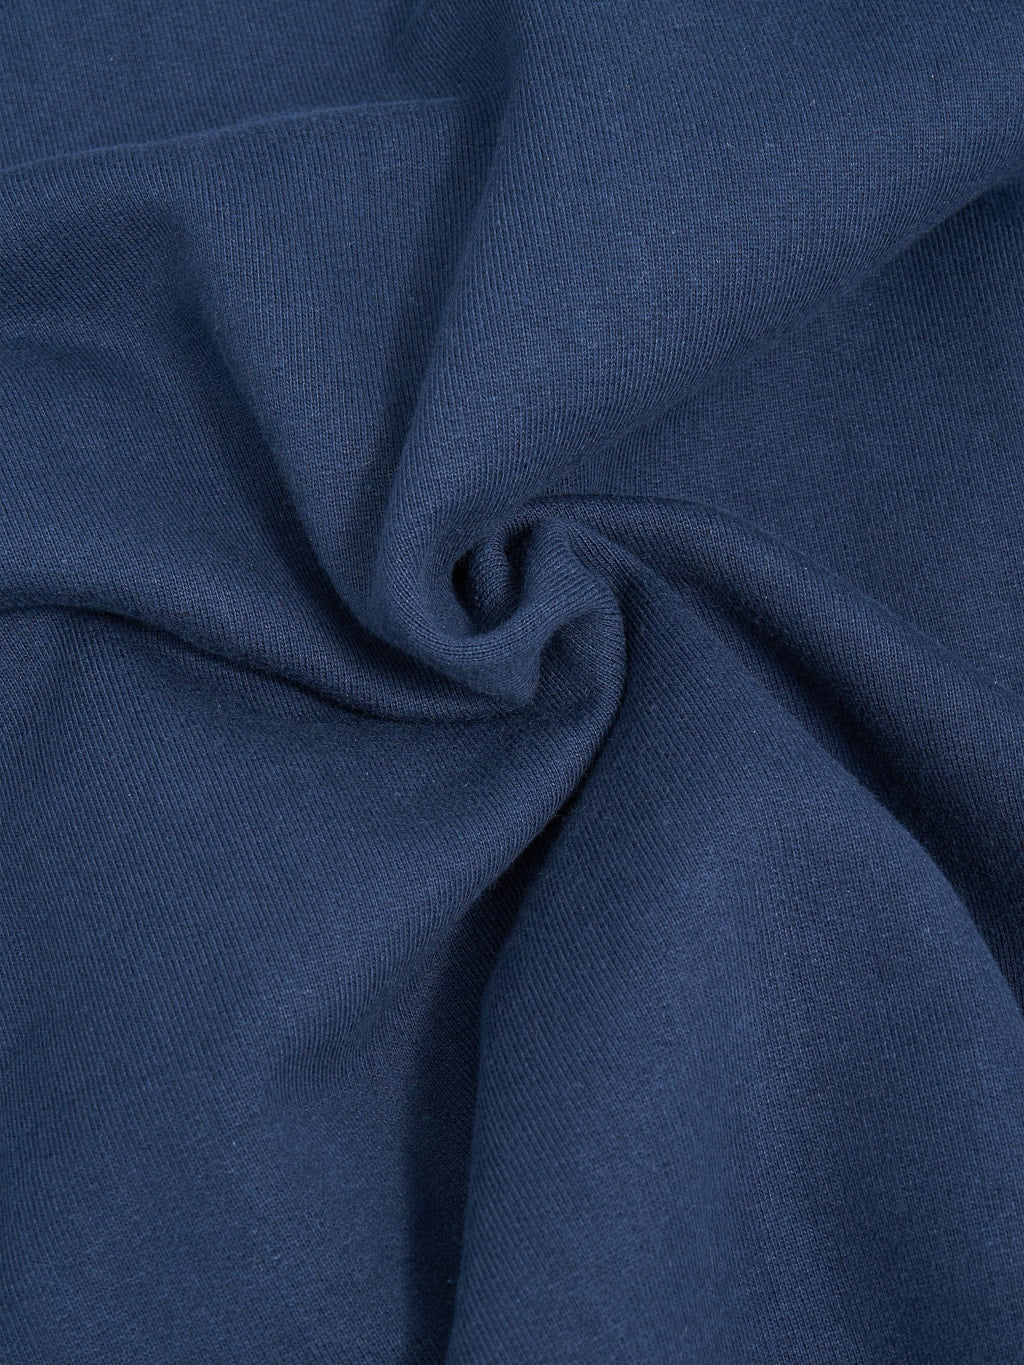 Merz B Schwanen loopwheeled swearshirt heavy ink blue cotton texture